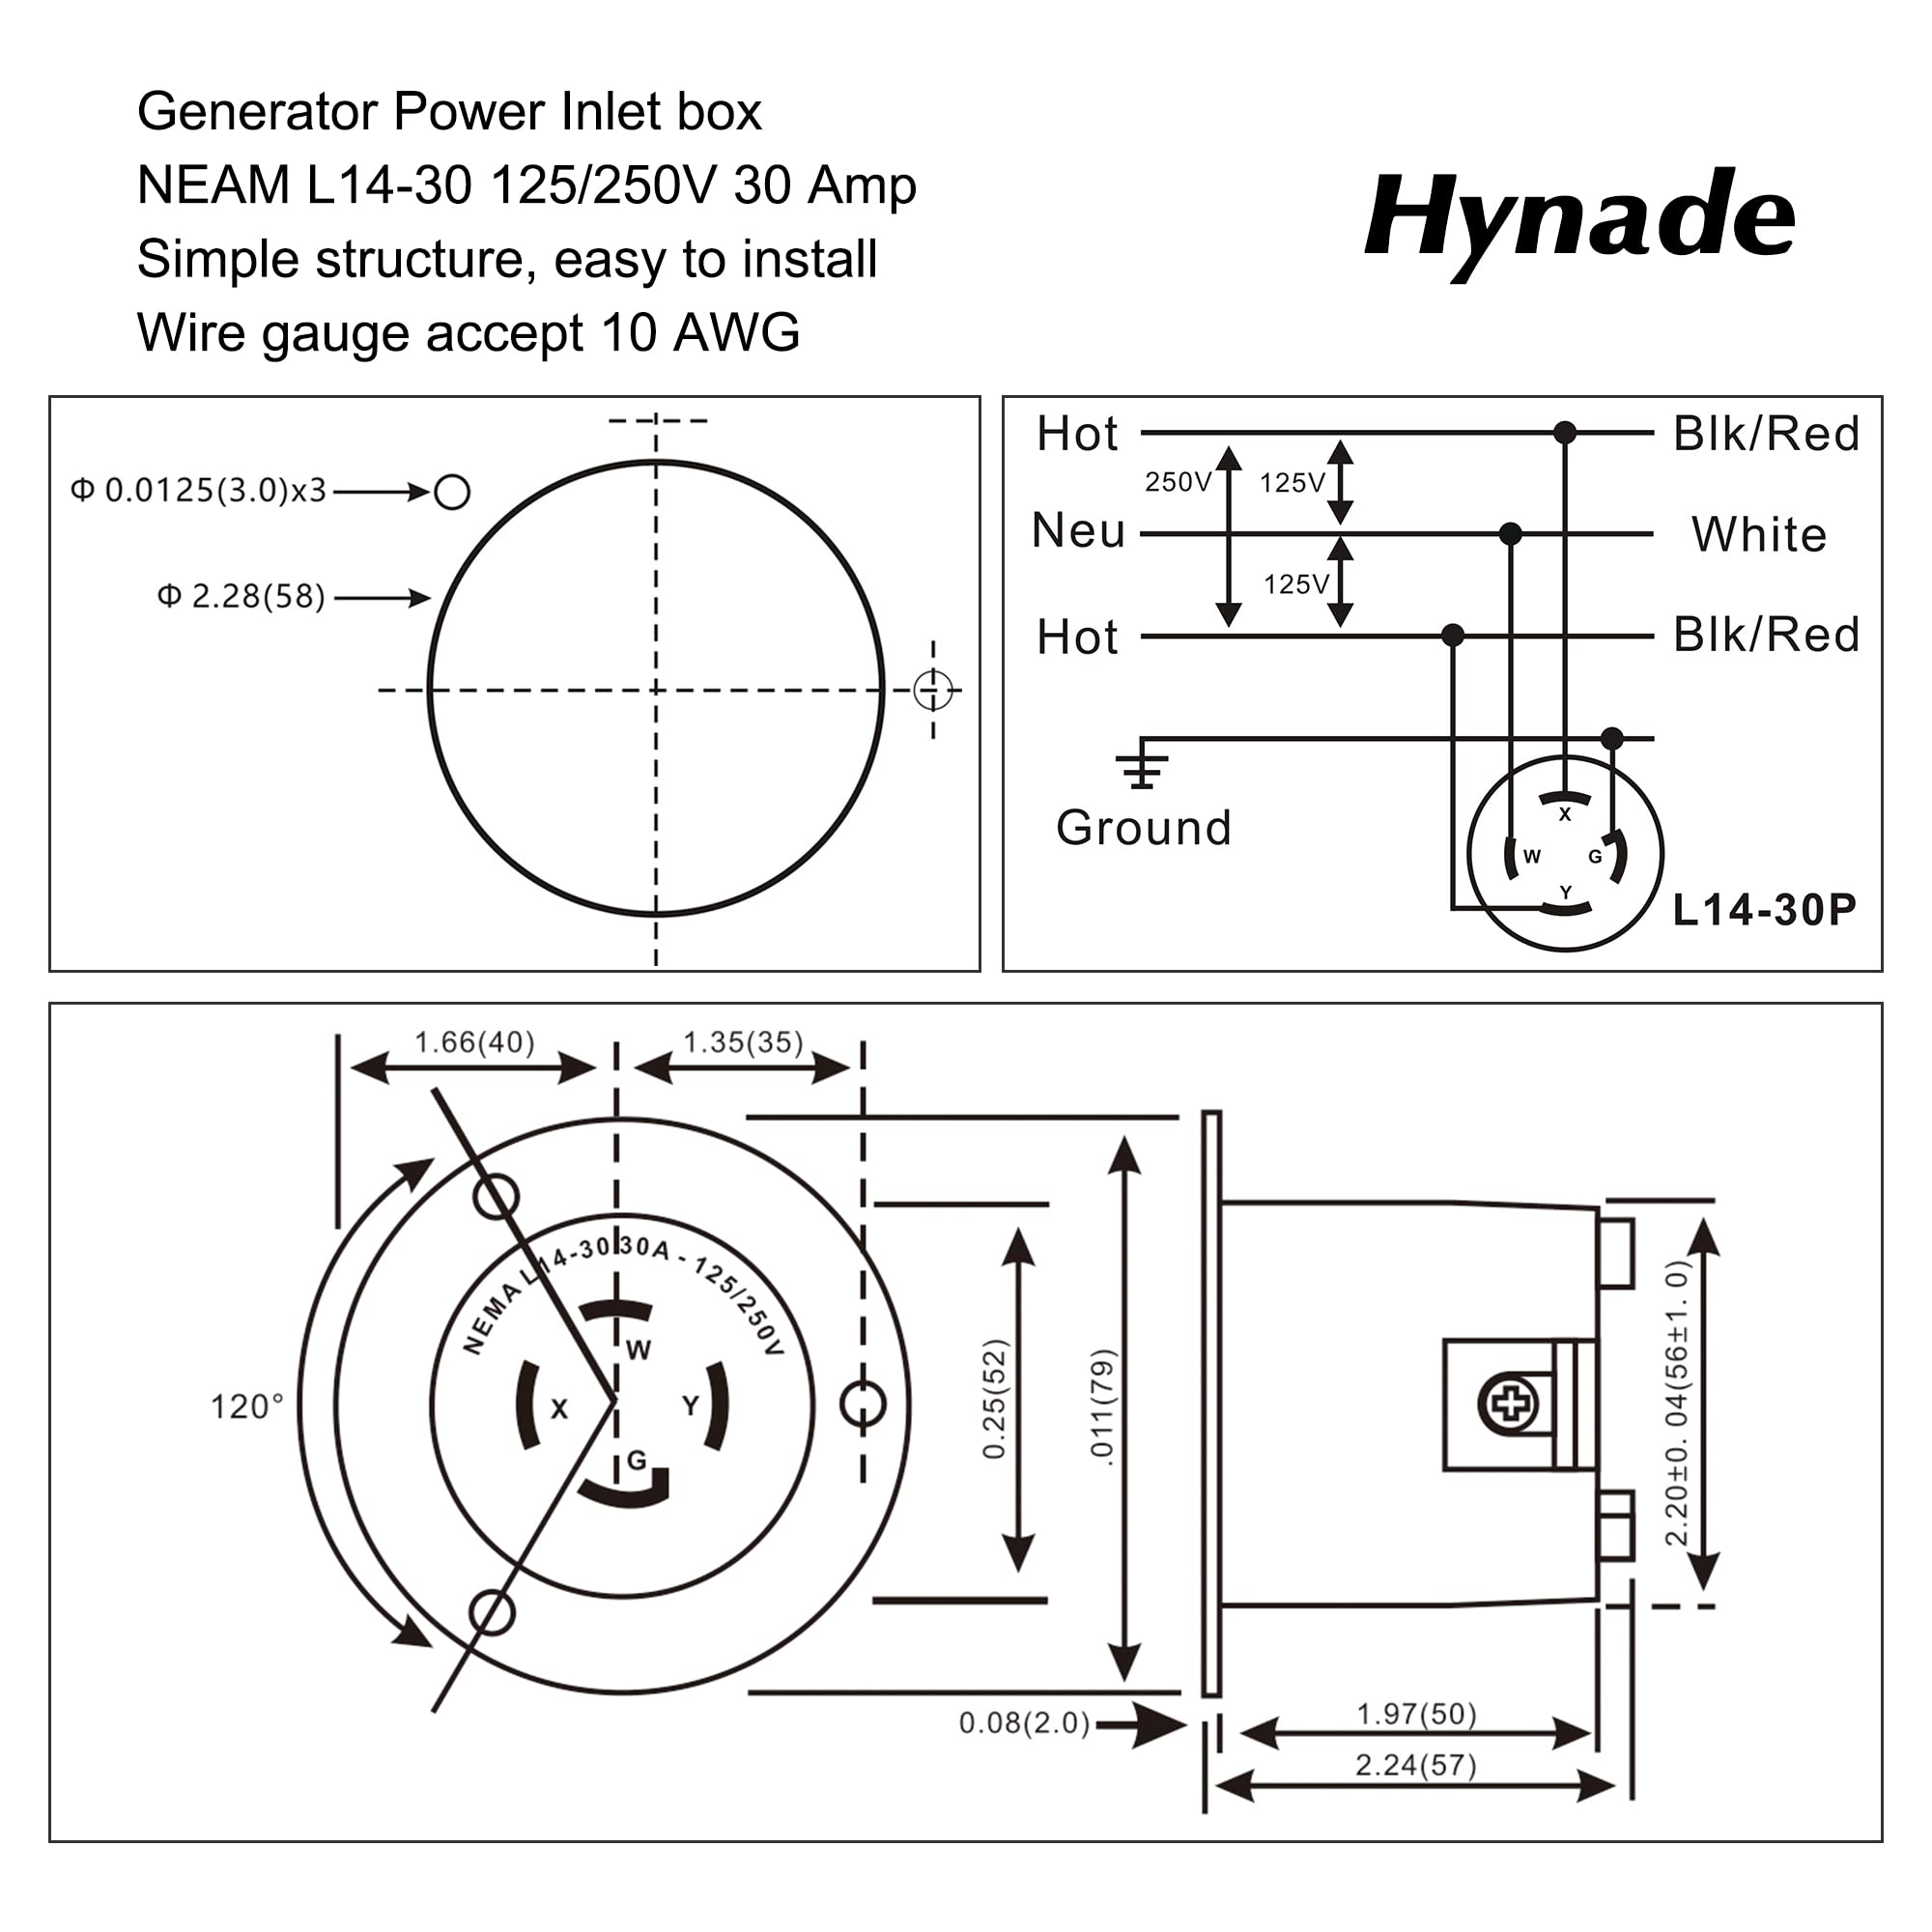 Hynade Generator Power Inlet Box, 30 Amp Generator Transfer Switch, NEMA L14-30P, Generators Up to 7,500 Running Watts 30Amps 3R NEMA Generator Inlet Box ETL Listed